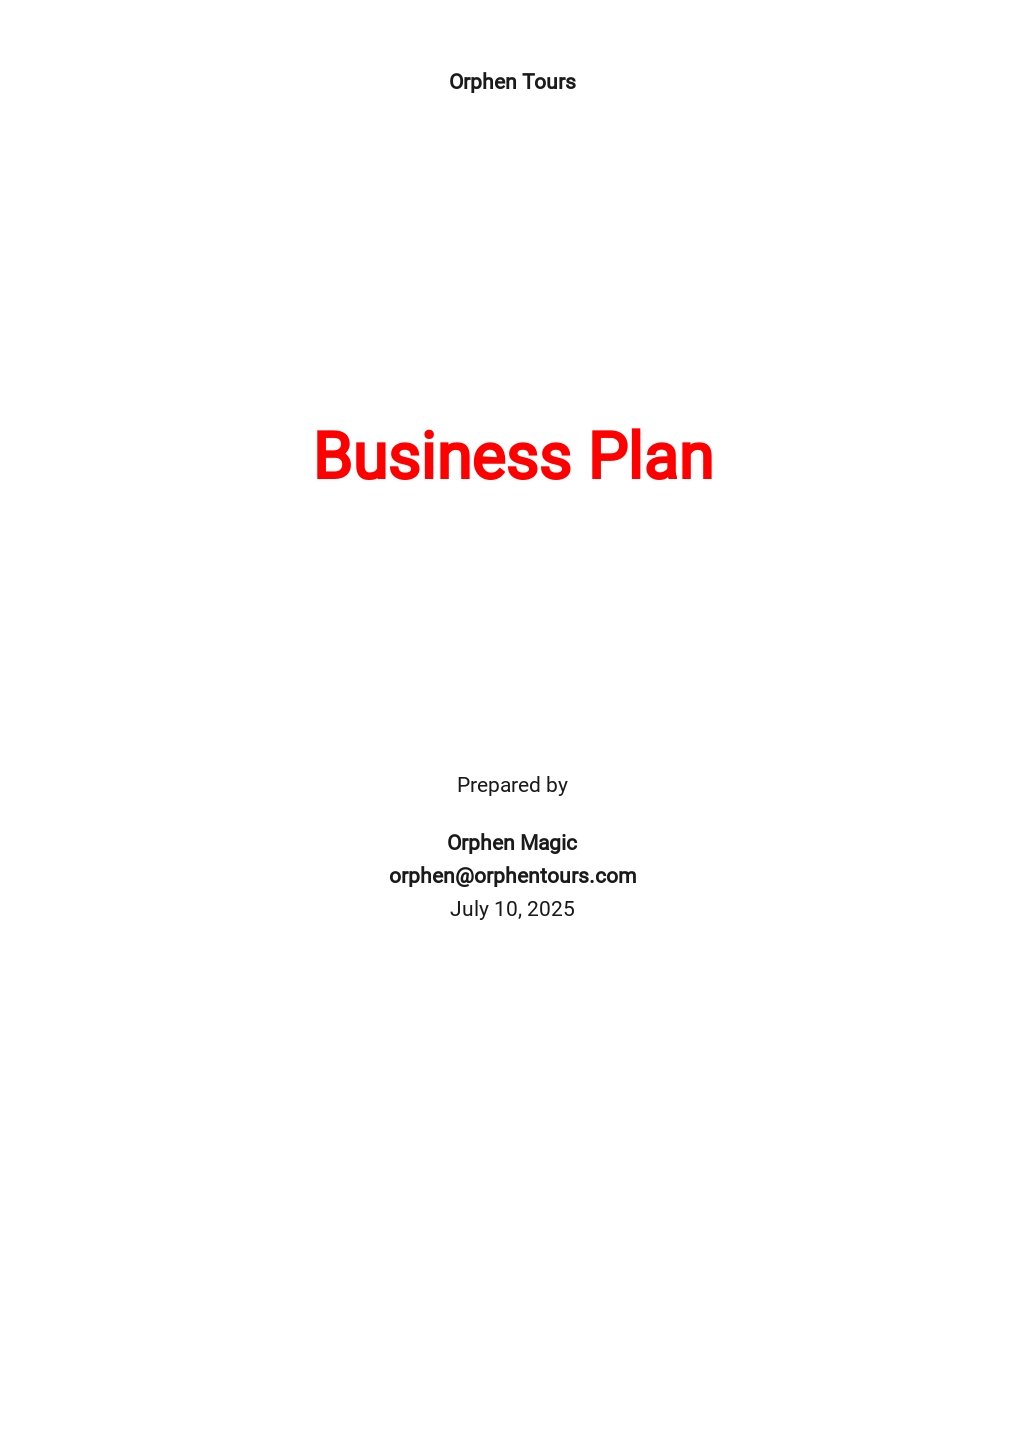 travel agency business plan pdf